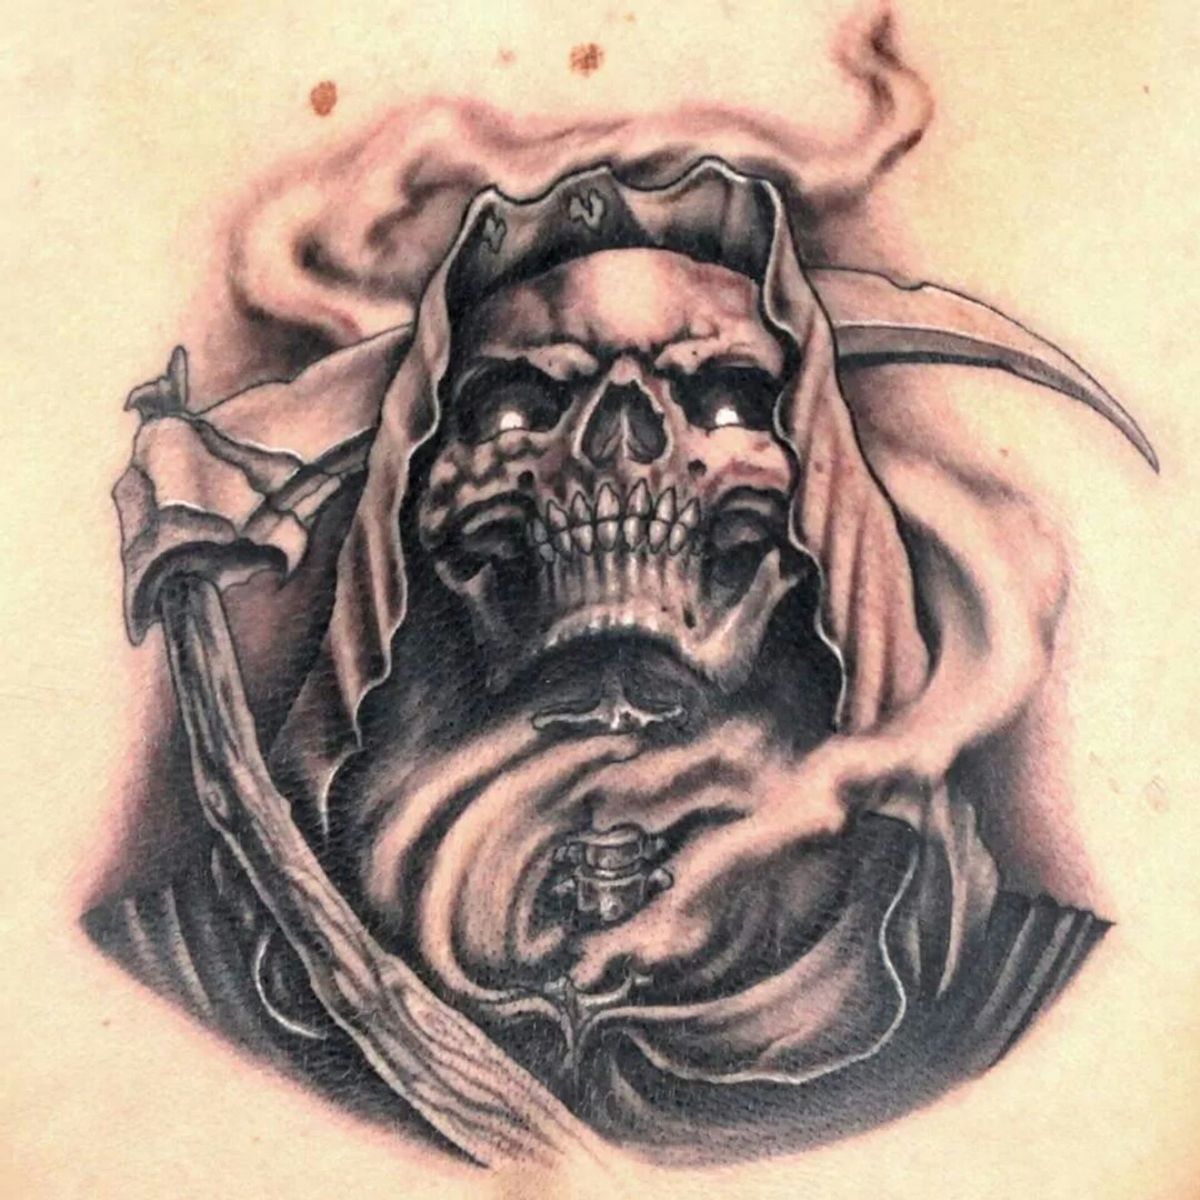 Tattoo uploaded by Nikki • Grim reaper done by season 5 winner Jason Clay  Dunn #inkmaster #wouldlovetohave #grimreaper #jcd • Tattoodo